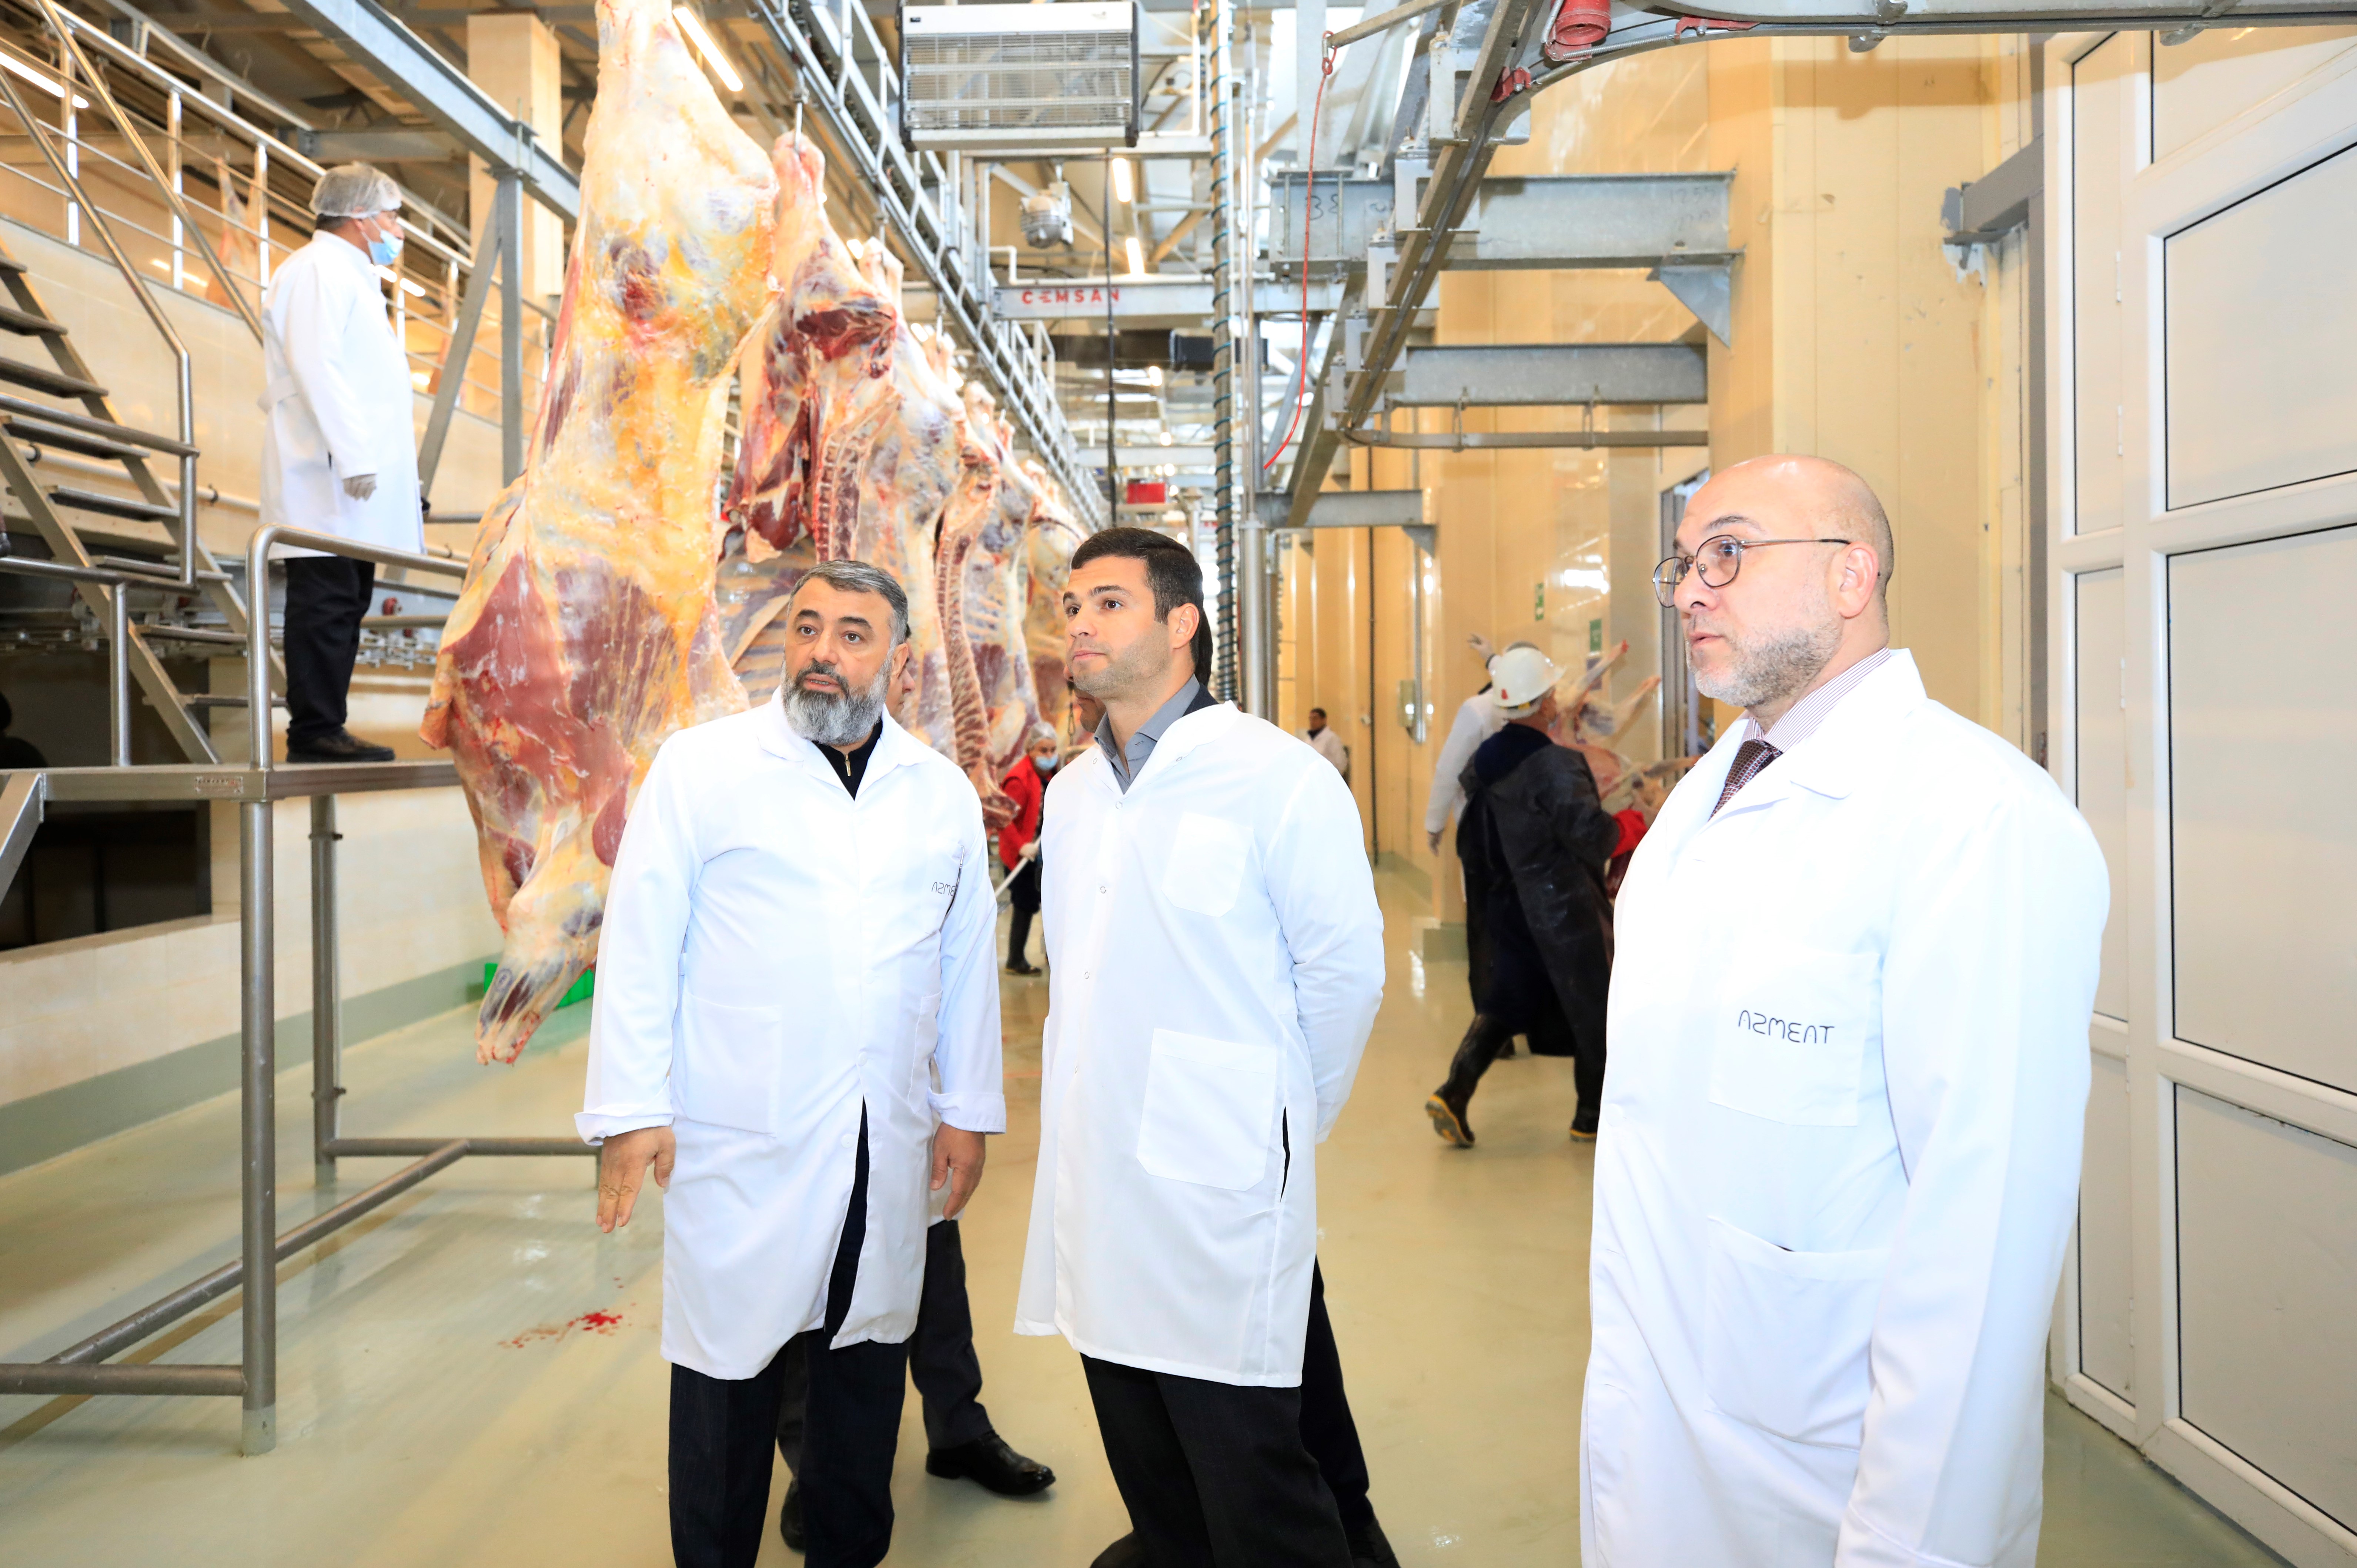 KOBİA management visits the slaughterhouse 